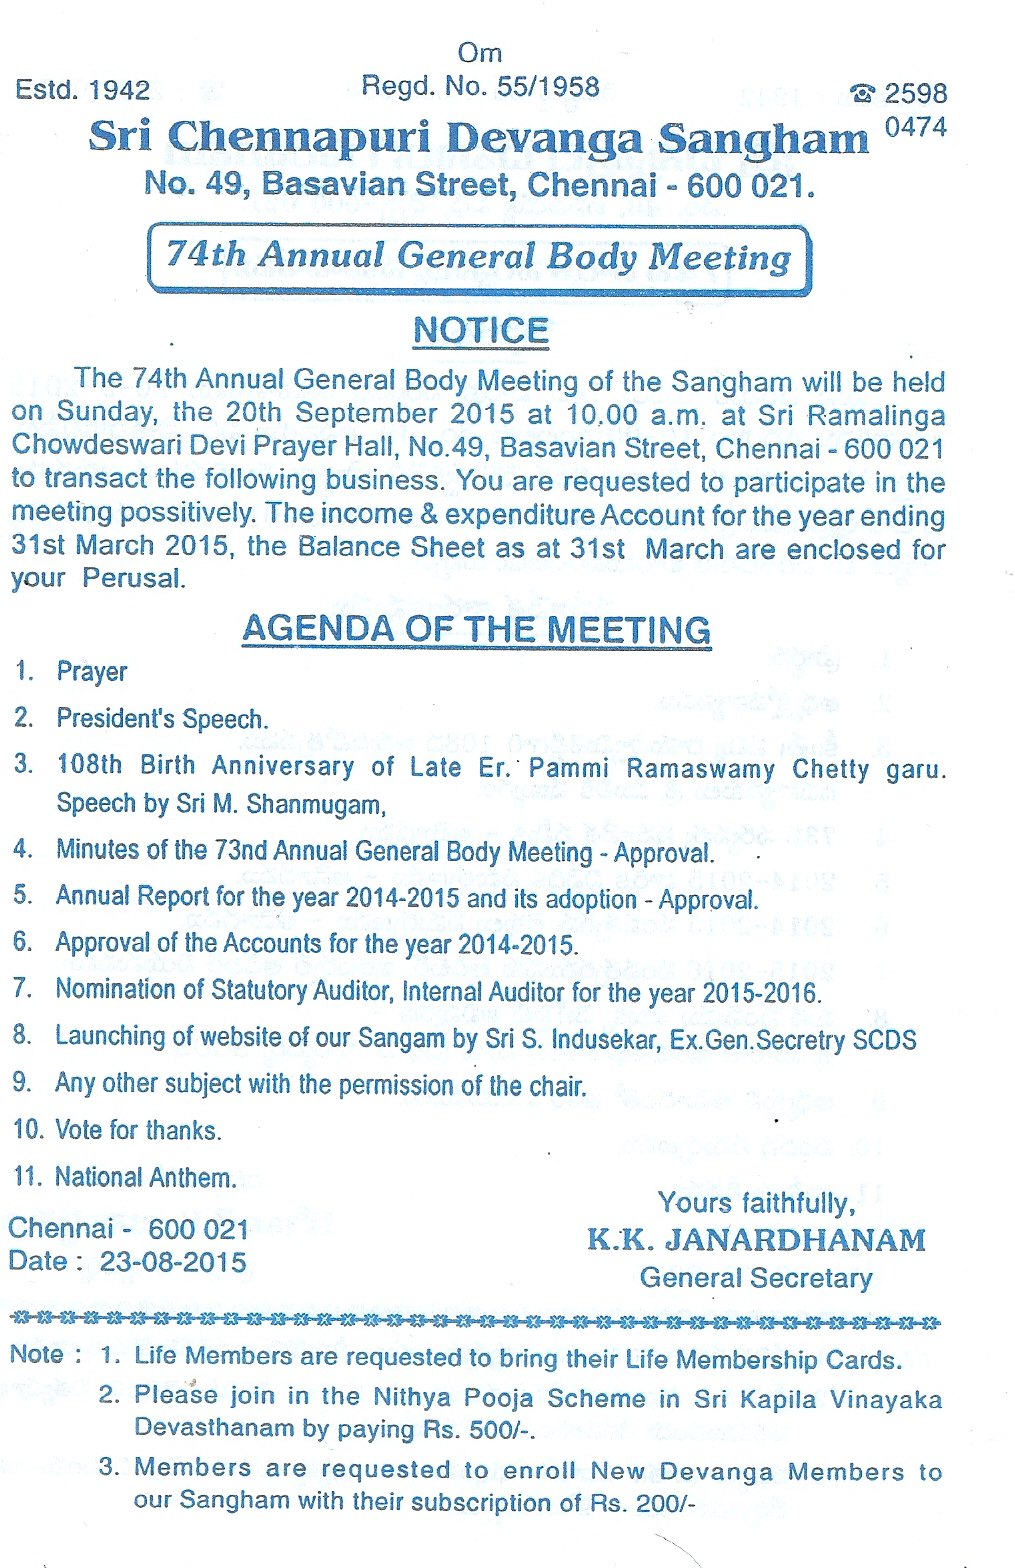 Sri Chennapuri Devanga Sangham 74th AGB Agenda